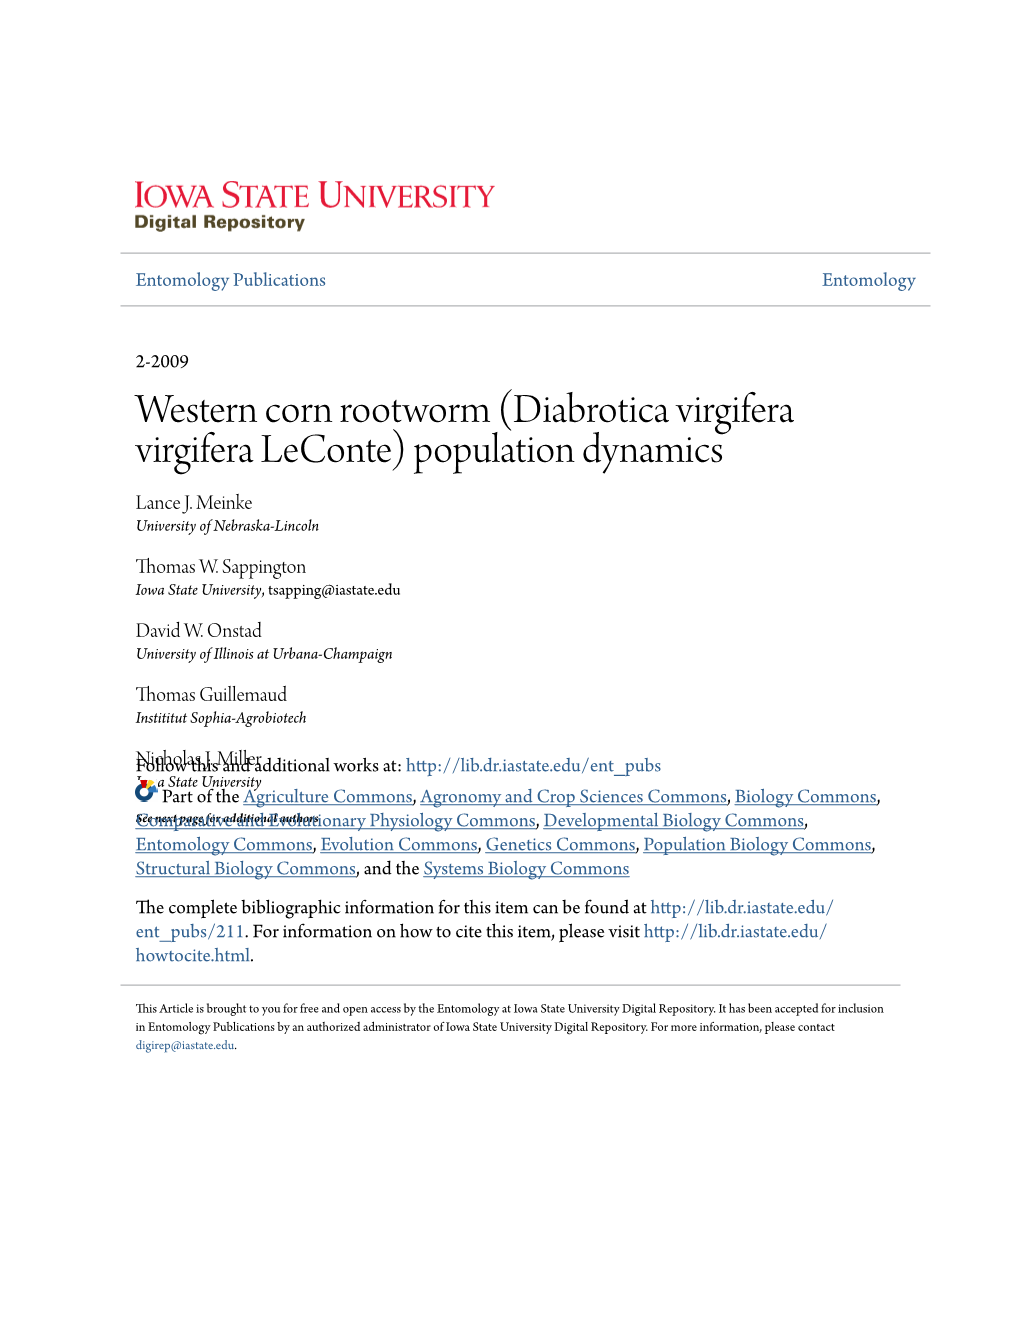 Western Corn Rootworm (Diabrotica Virgifera Virgifera Leconte) Population Dynamics Lance J